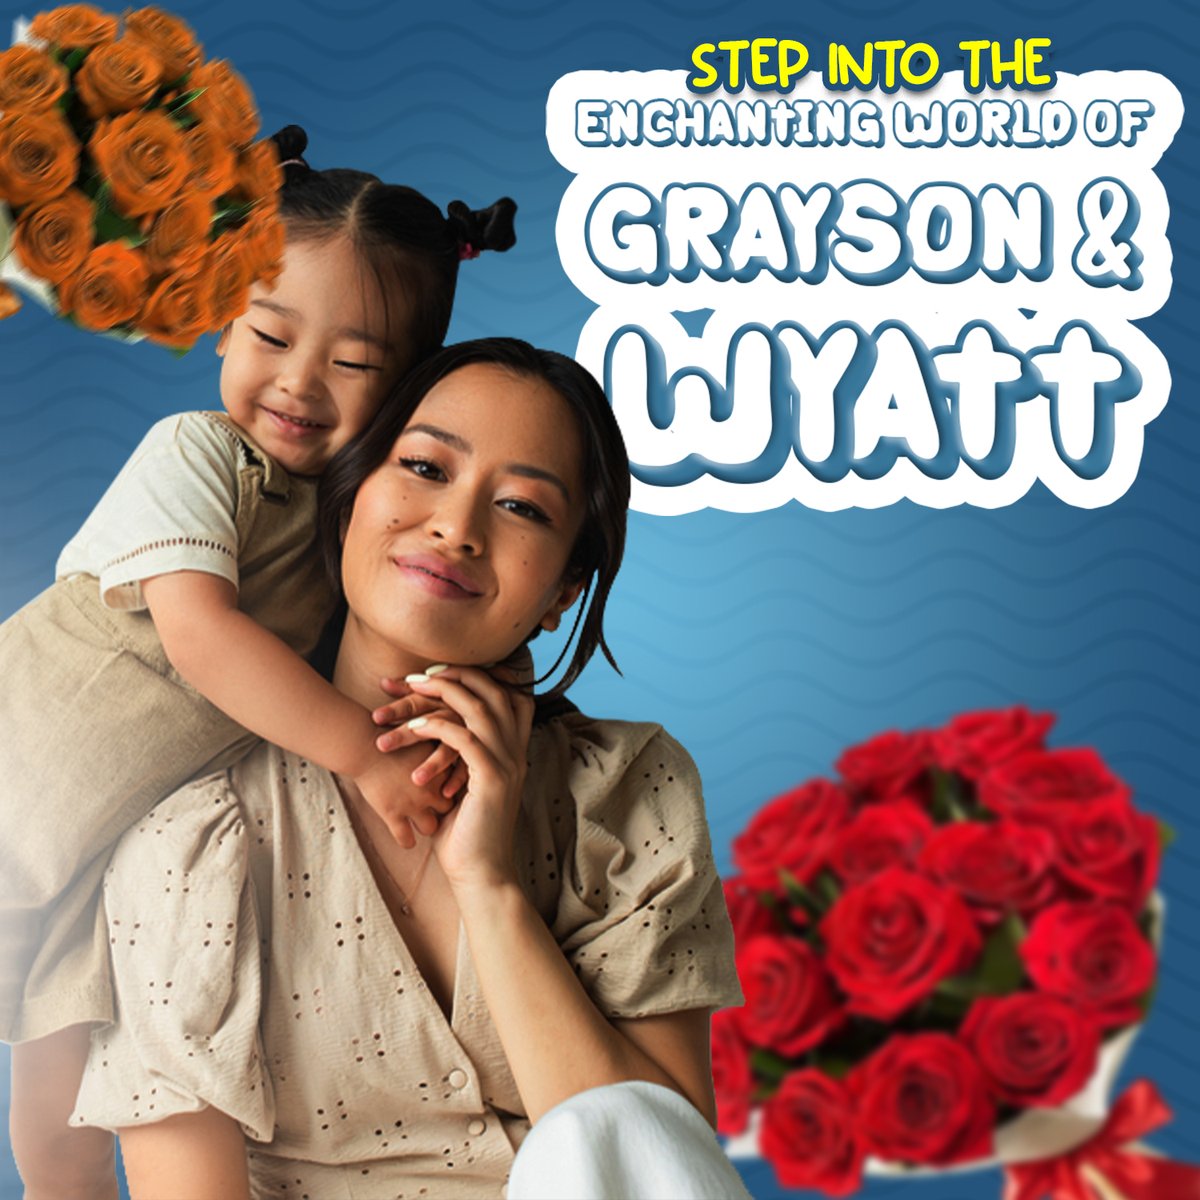 These mother-child classics will bring you & your little ones closer with every sweet hug.

#kidsfashion #kidswear #kidsclothing #kidstoys #childrenbooks #Grayson
#wyatt #WyattFamily #graysonwyatt